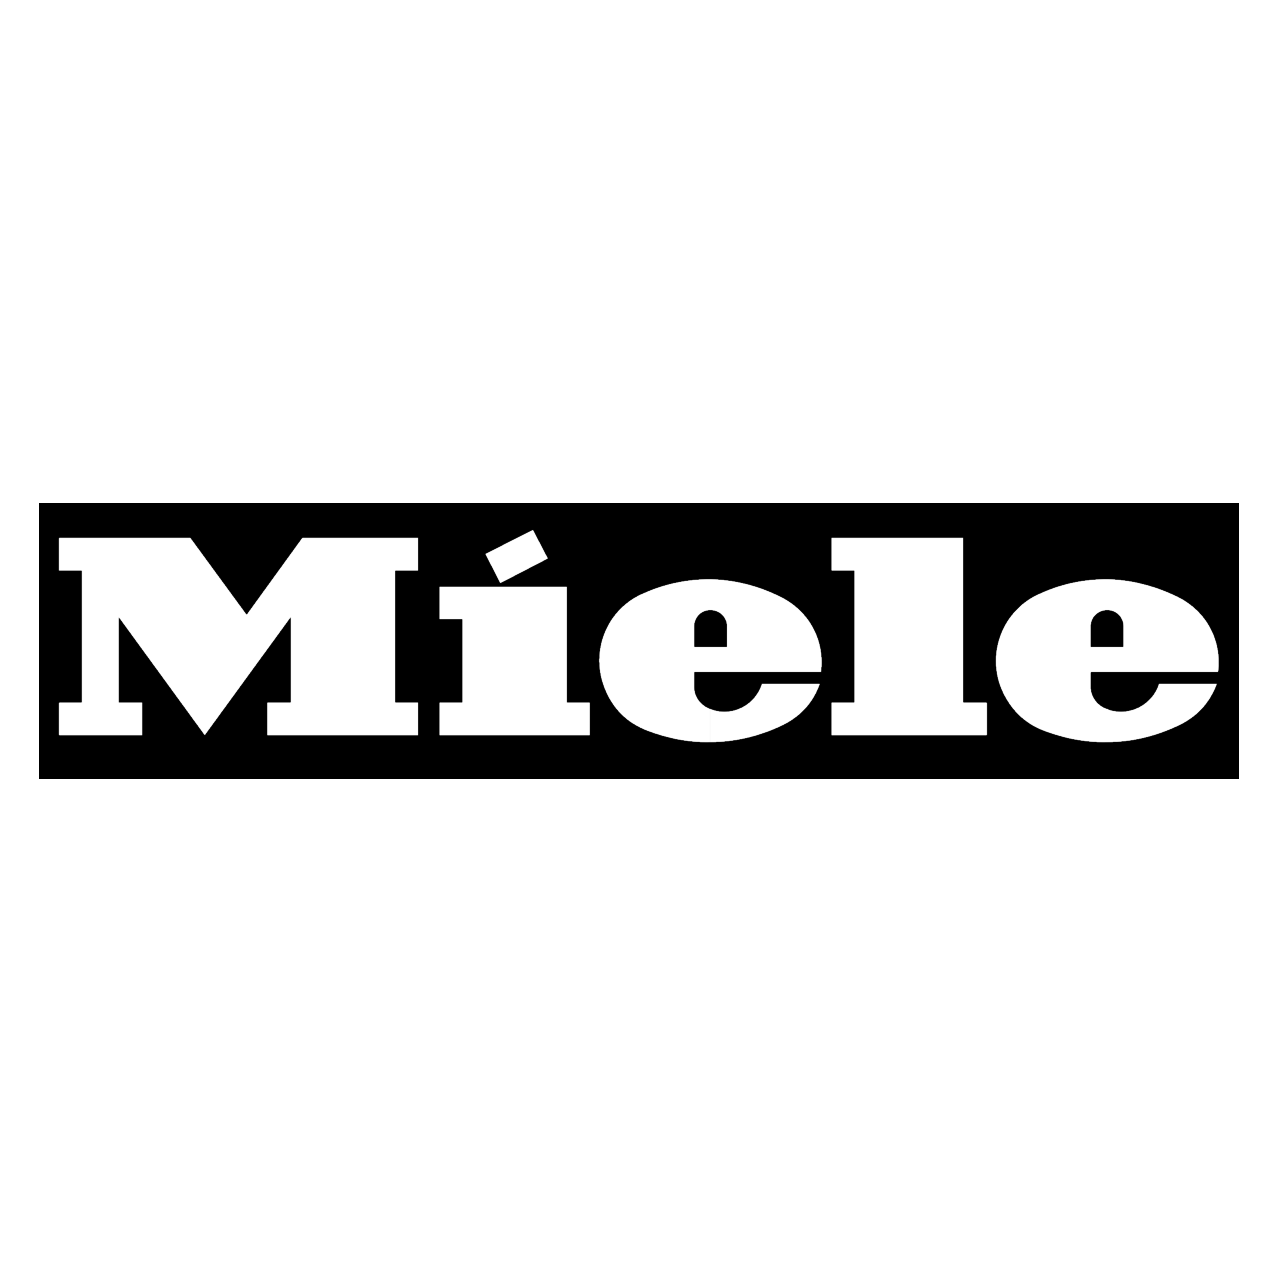 miele-logo-black-and-white